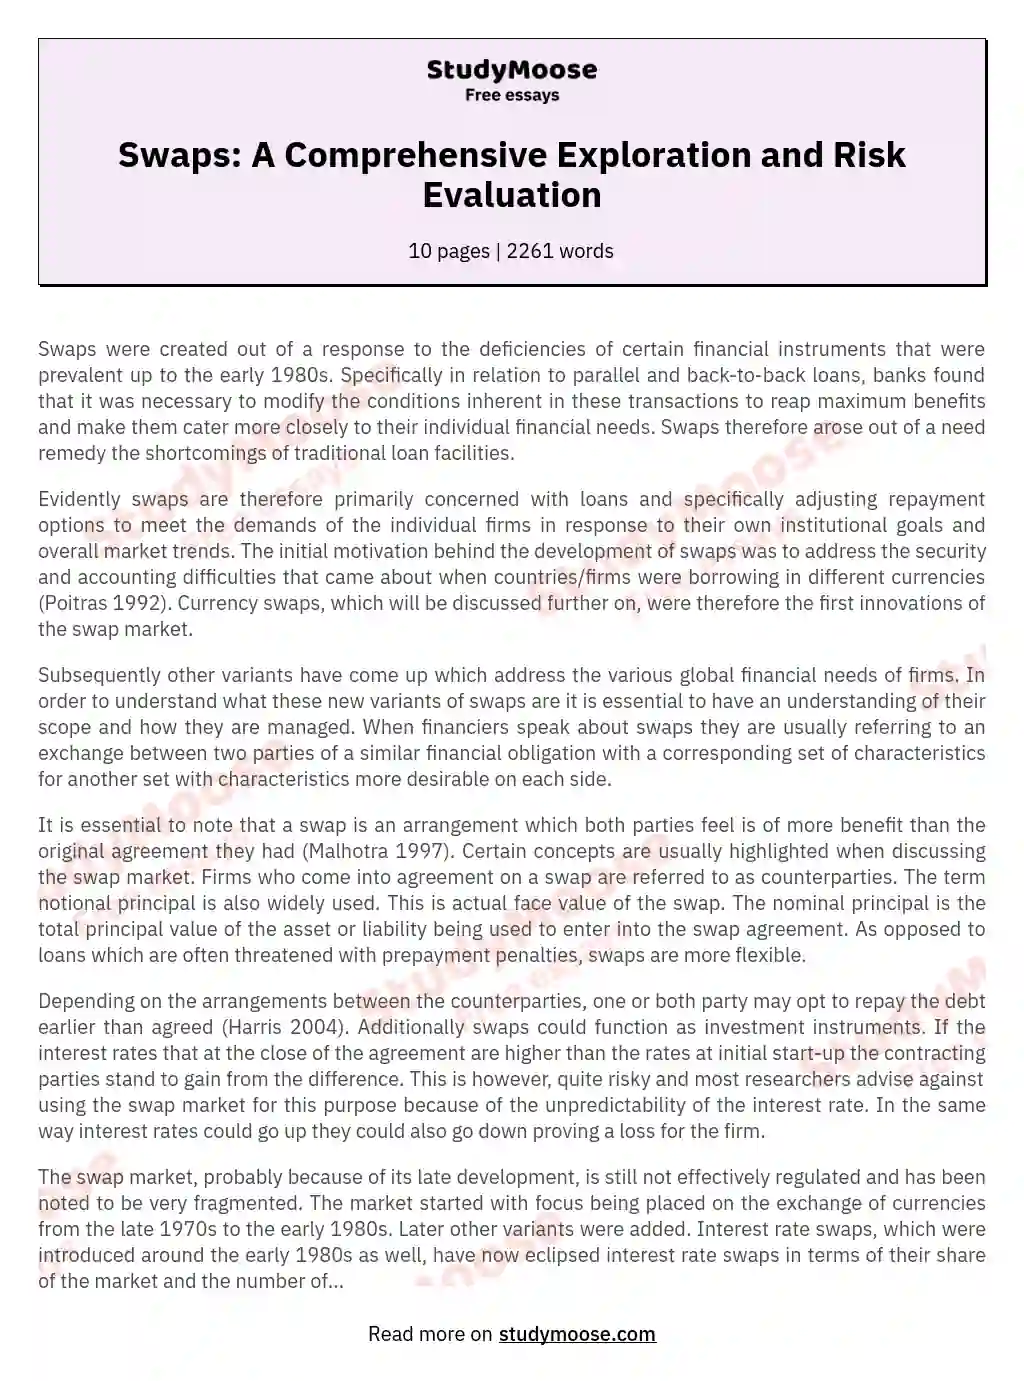 Swaps: A Comprehensive Exploration and Risk Evaluation essay